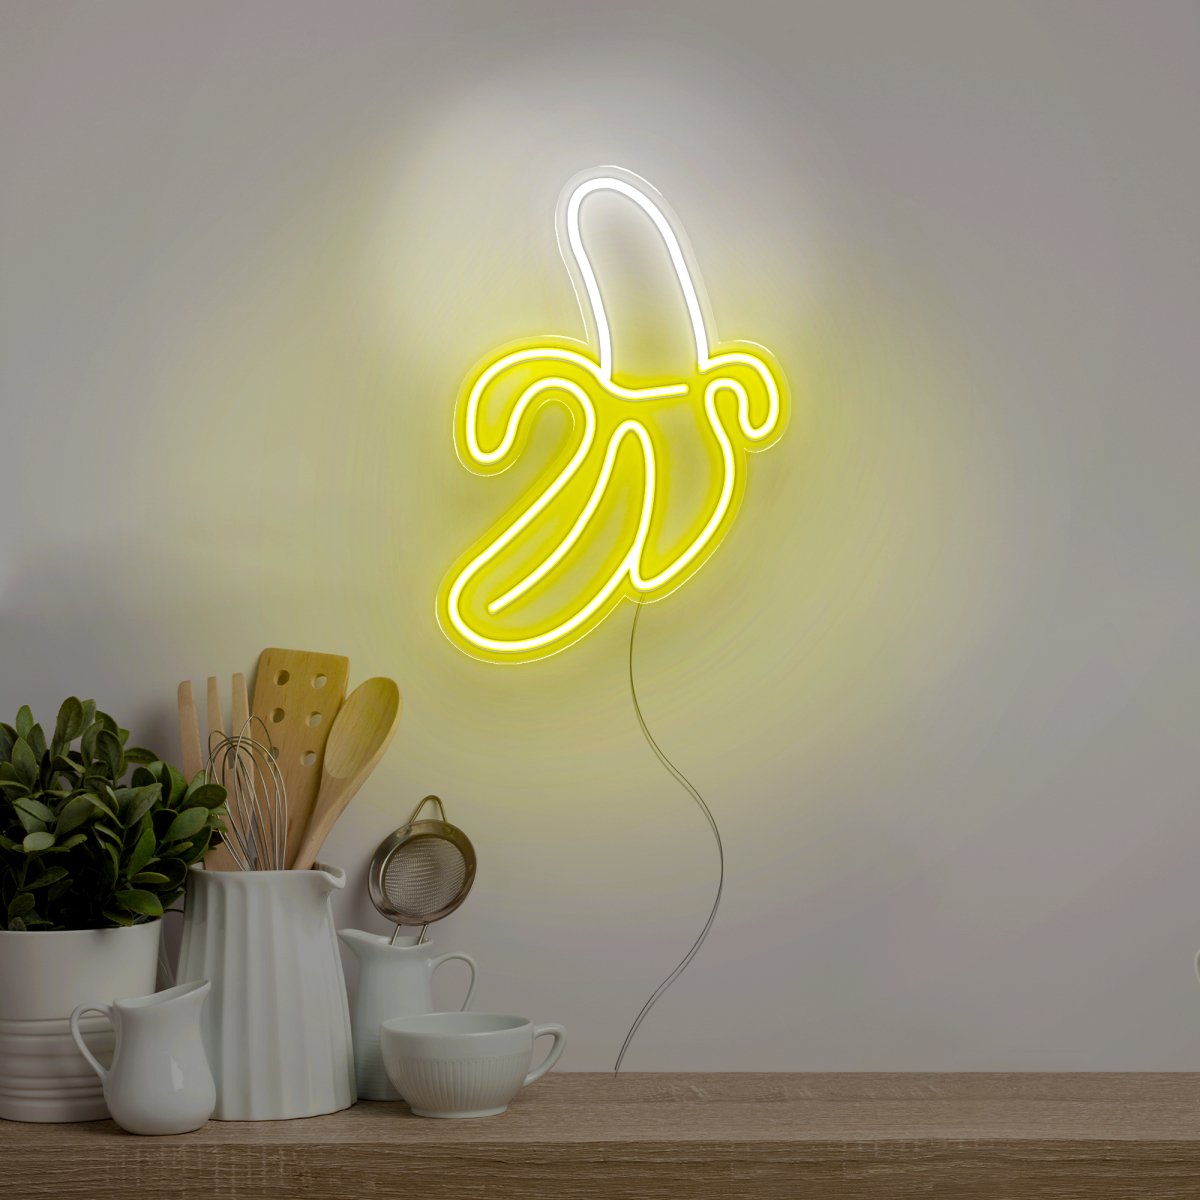 Banana Fruits Led Neon Sign - Reels Custom